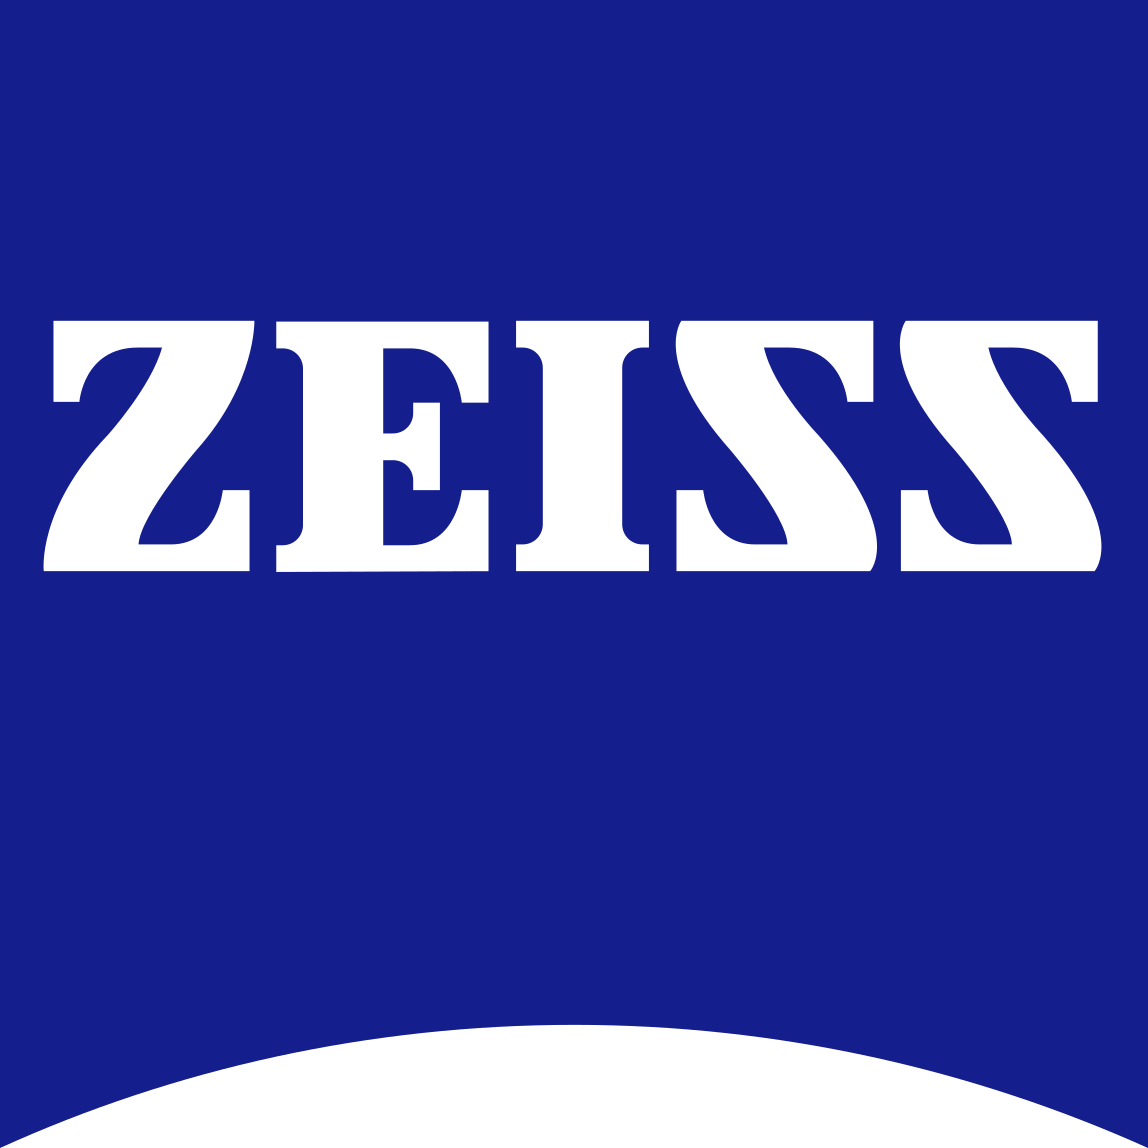 ZEISS Qualityforum